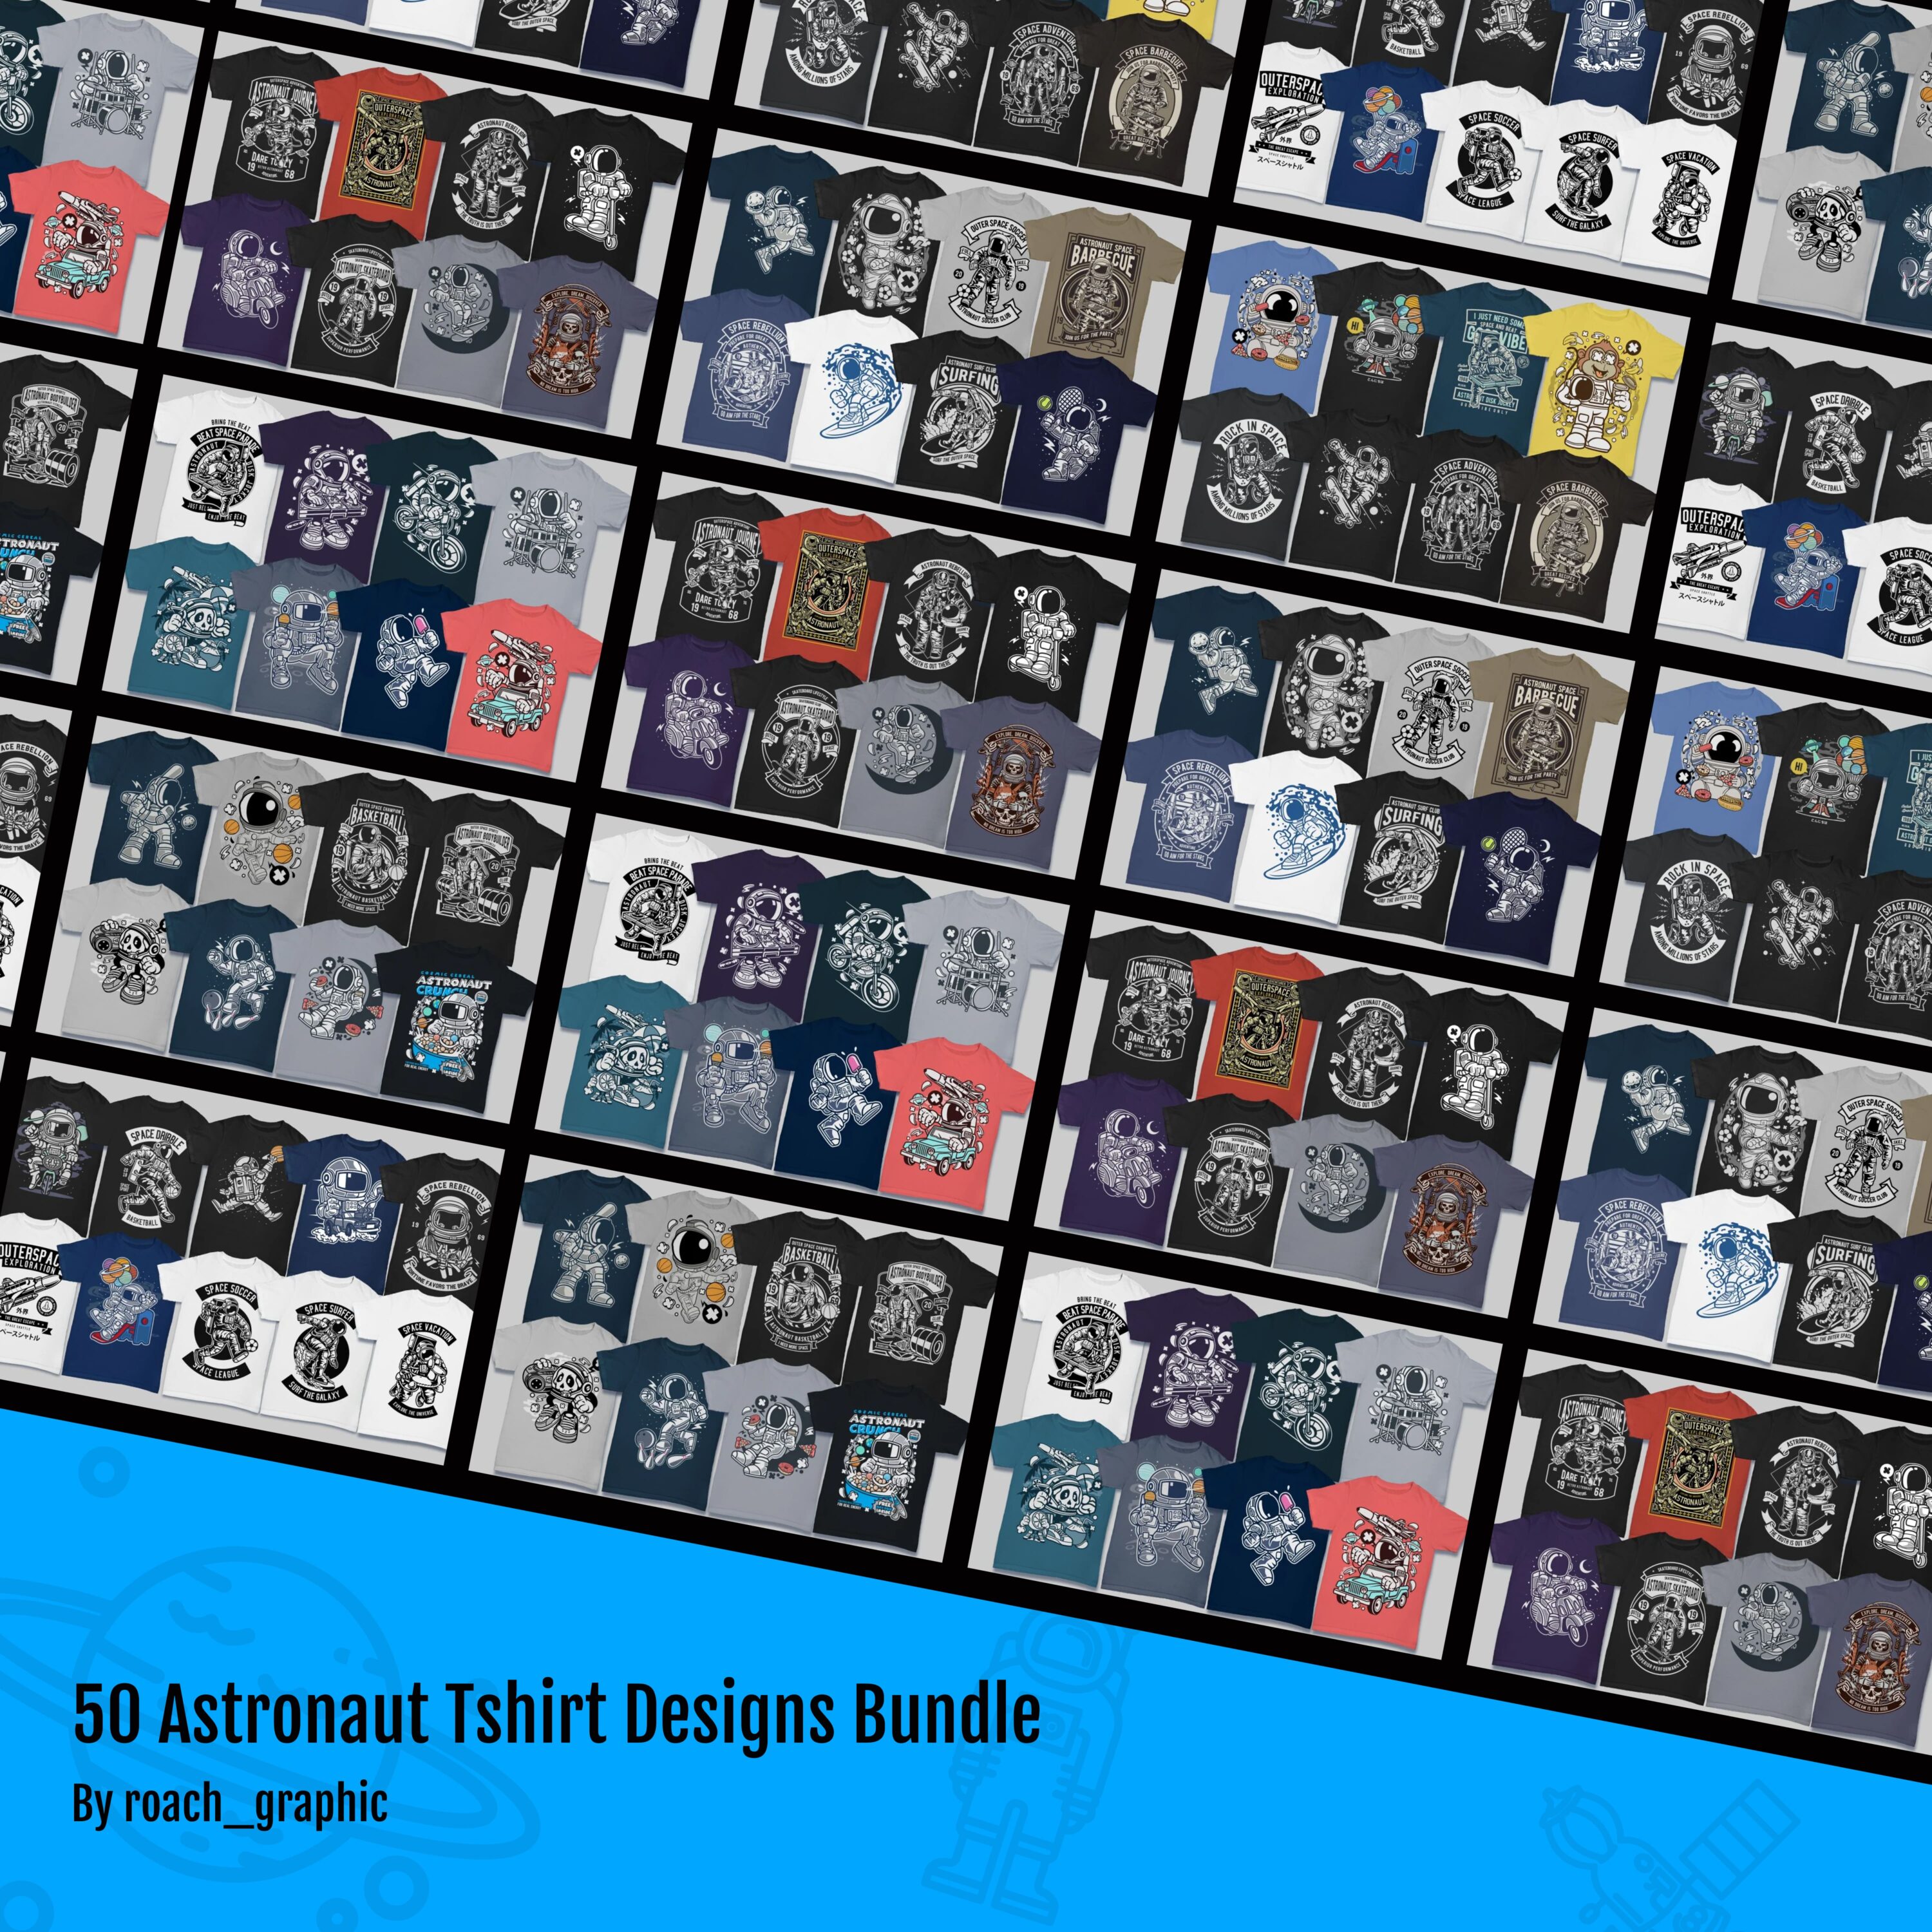 50 astronaut tshirt designs bundle.